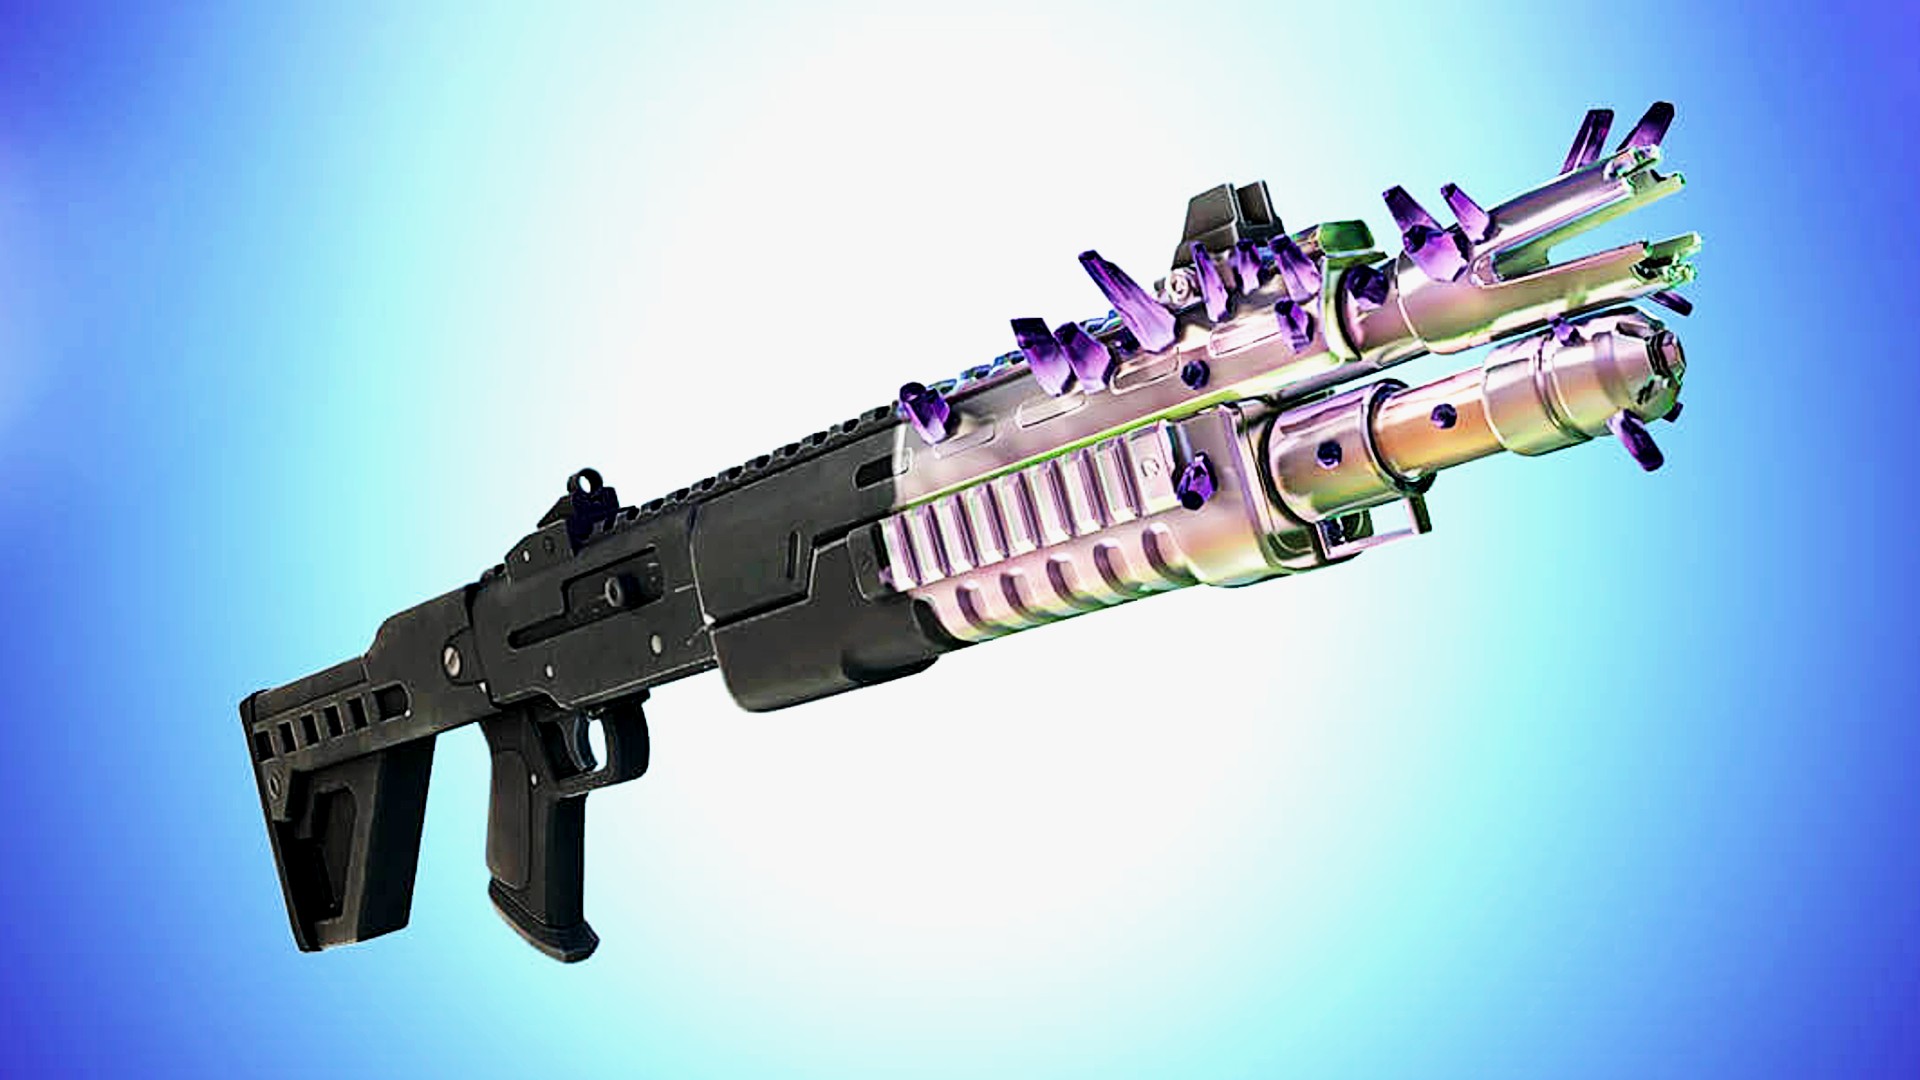 Fortnite EvoChrome weapons: How to evolve the new shotgun and rifle